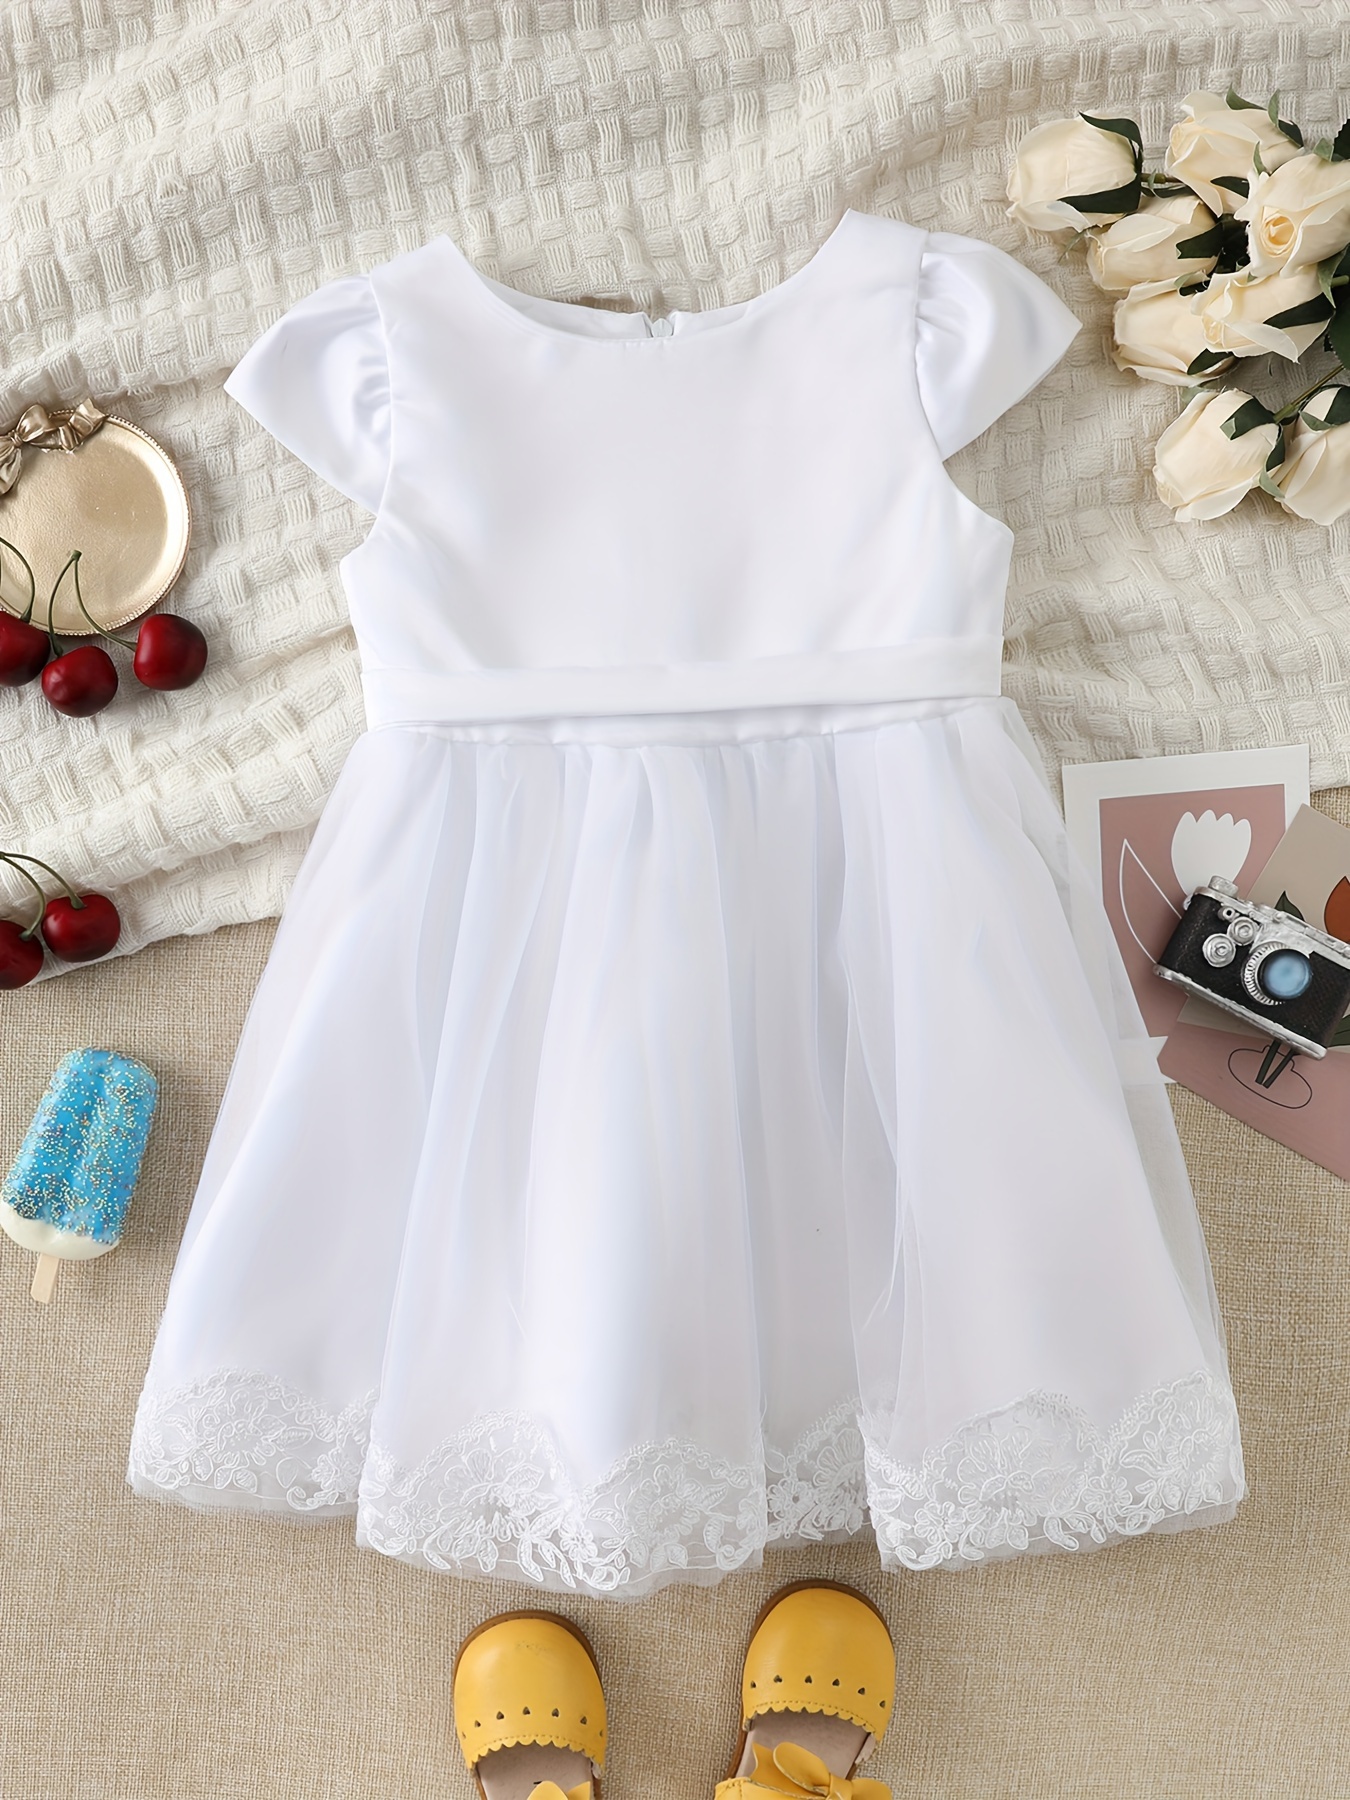 CHGBMOK Clearance Infant Toddler Baby Girls Fashion Long Sleeve